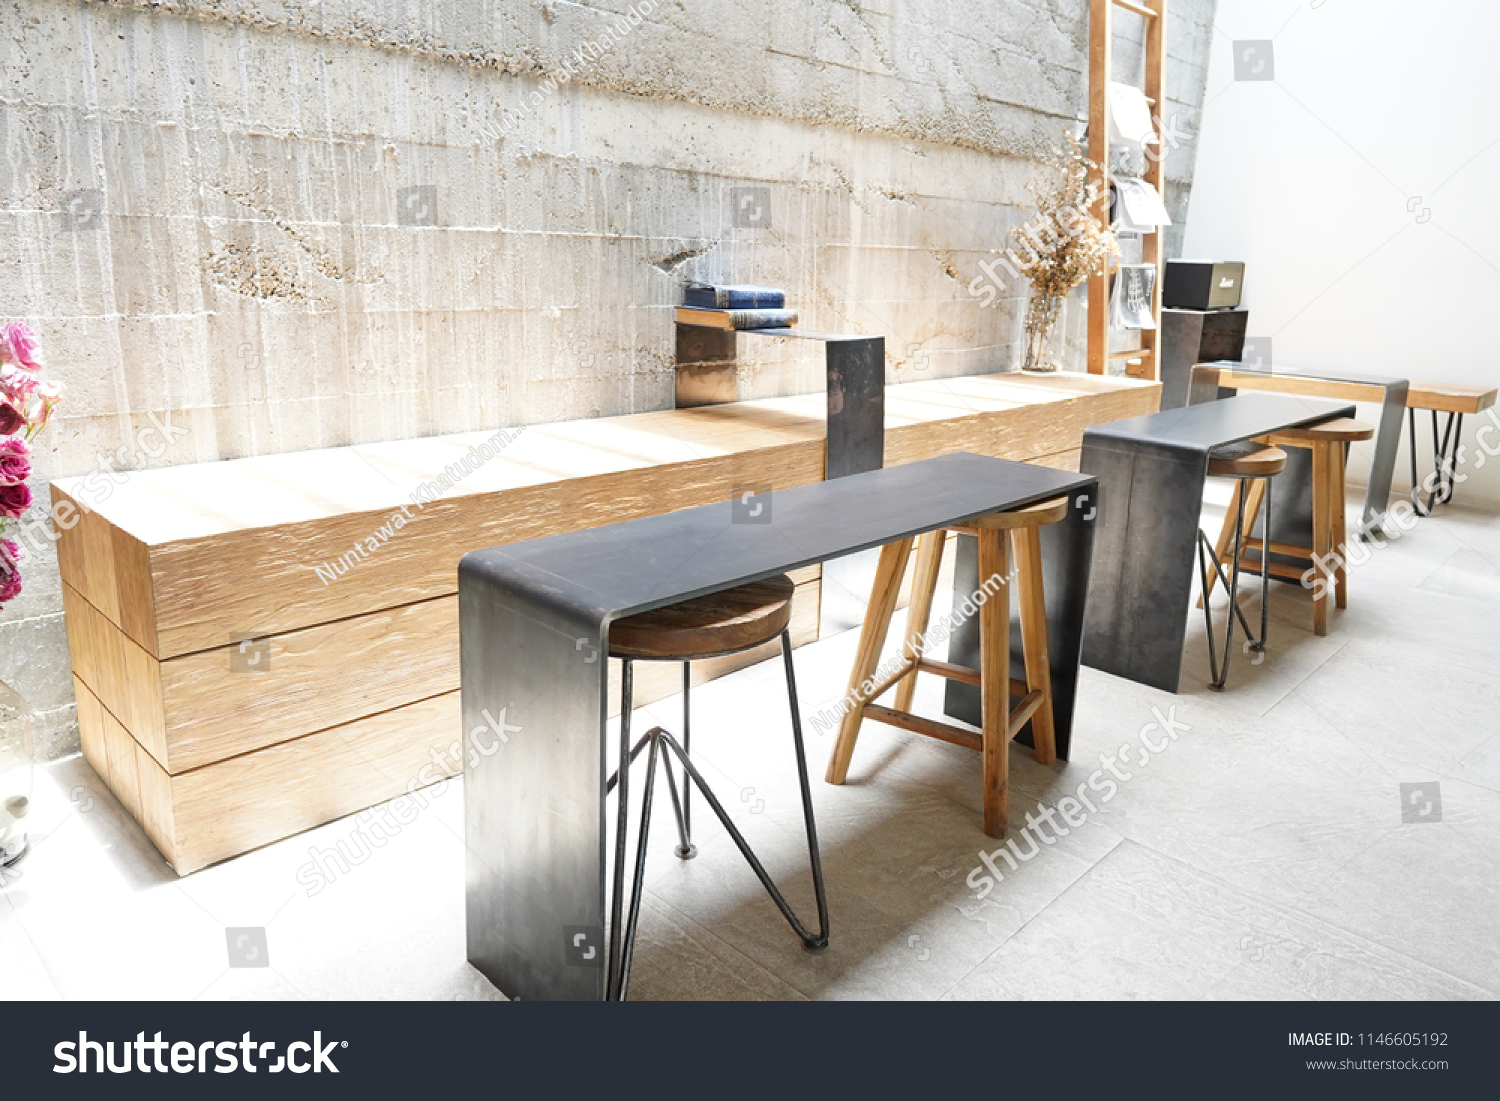 Minimalist Coffee Shop Interior Design Stock Photo Edit Now 1146605192,Home Vegetable Garden Design